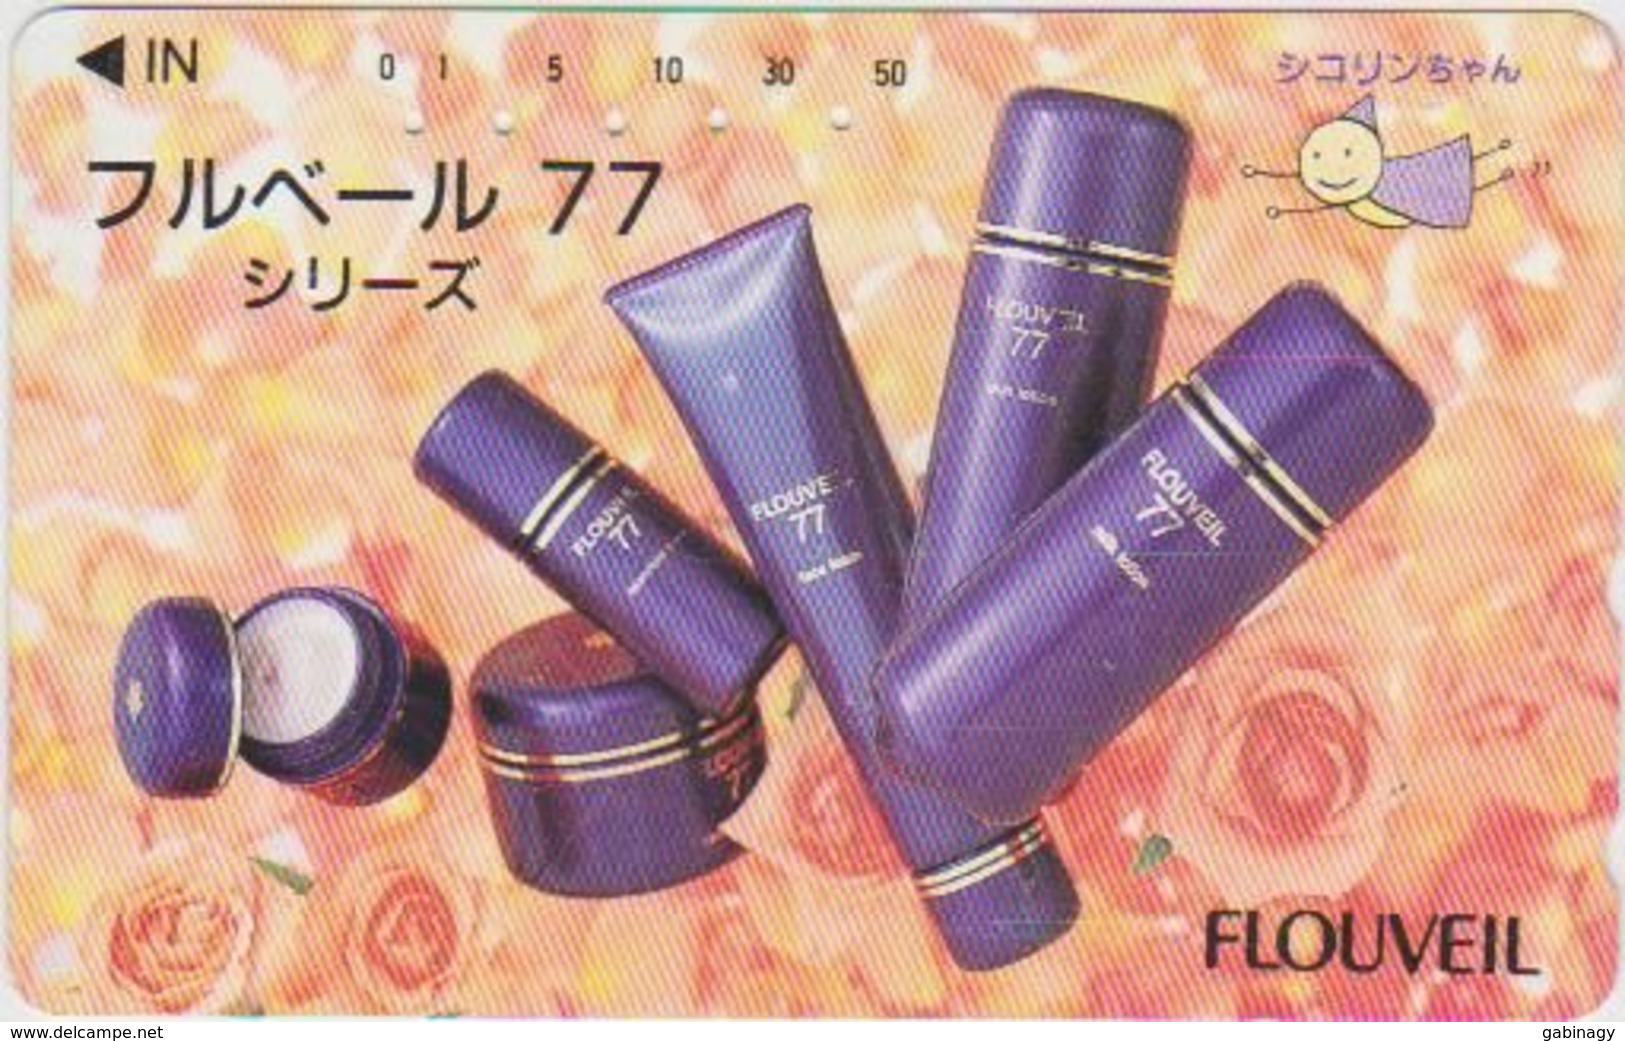 COSMETIC - JAPAN 002 - FLOUVEIL - Perfume